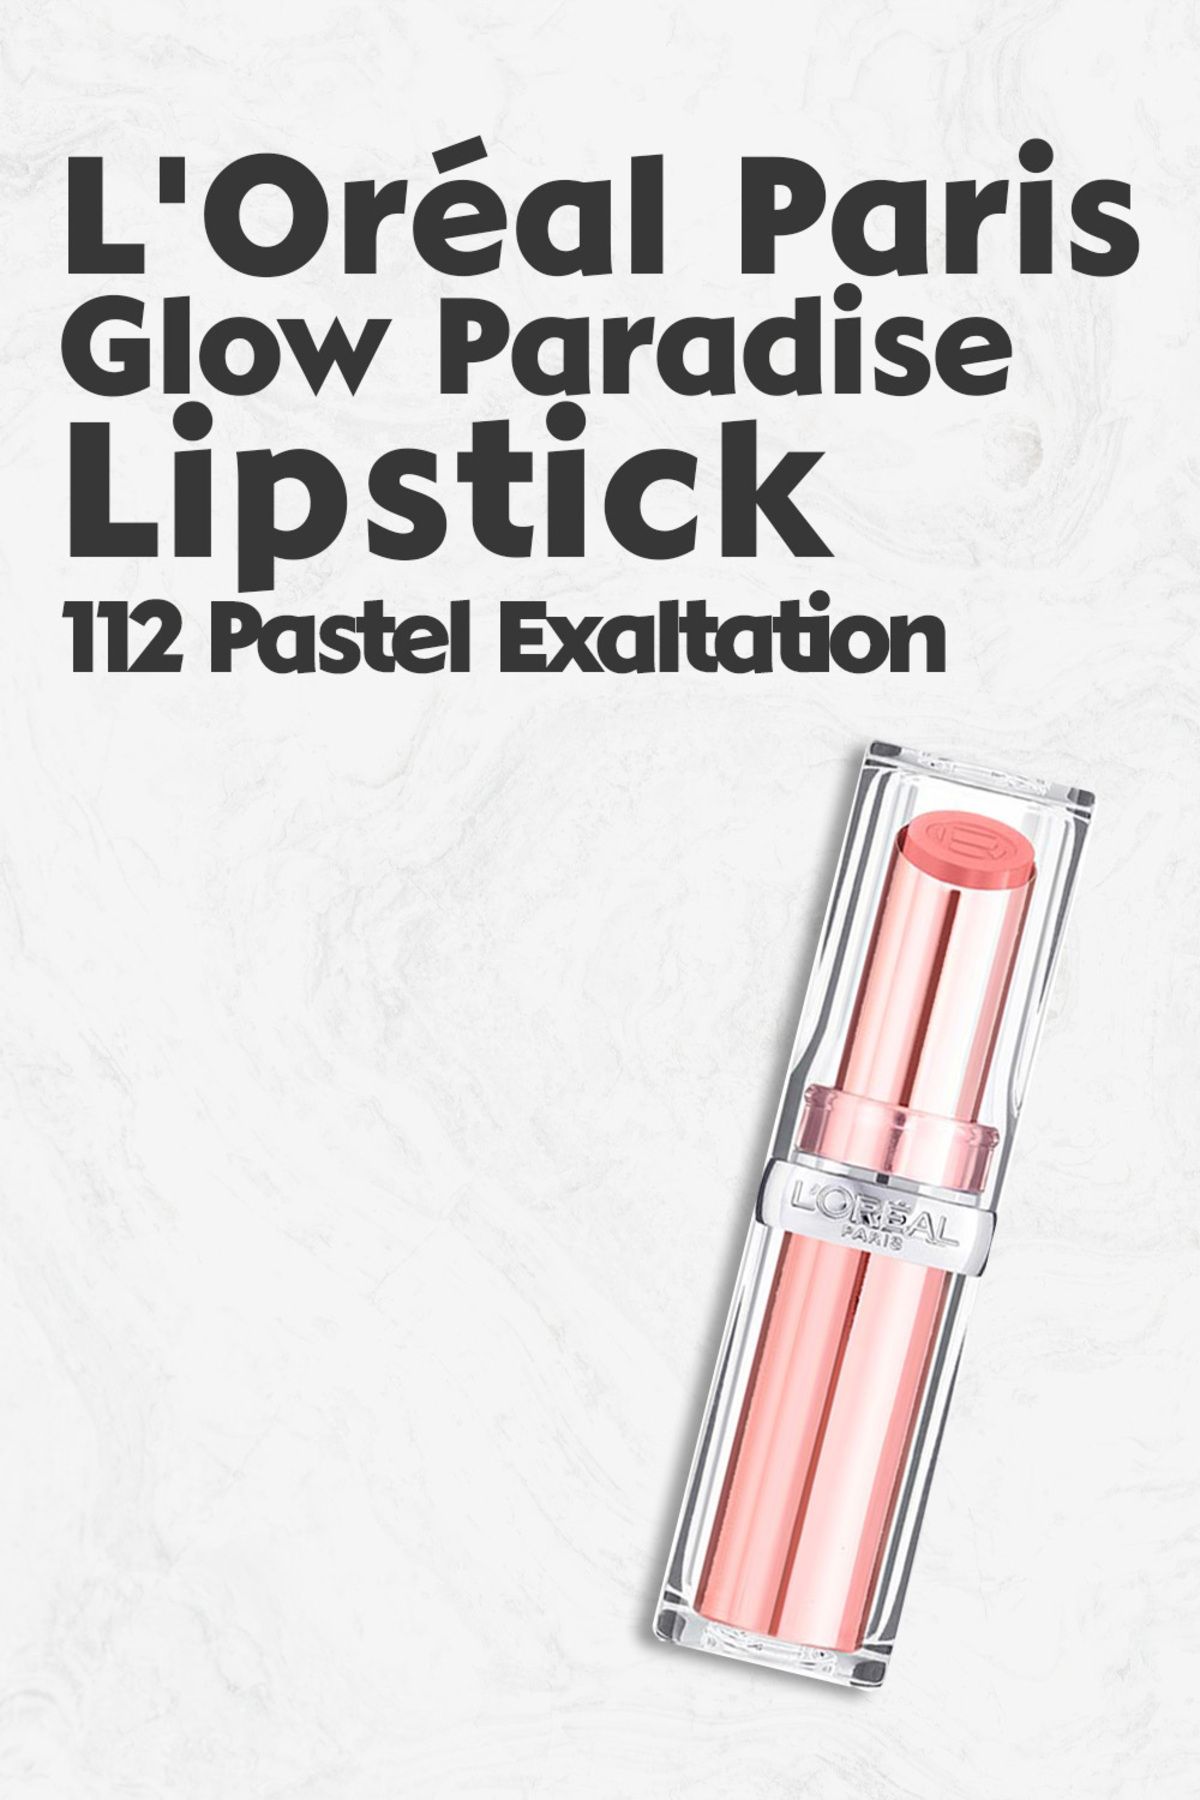 L'Oreal Paris Loreal Paris Glow Paradise Lipstick ruj  112 Pastel Exaltation